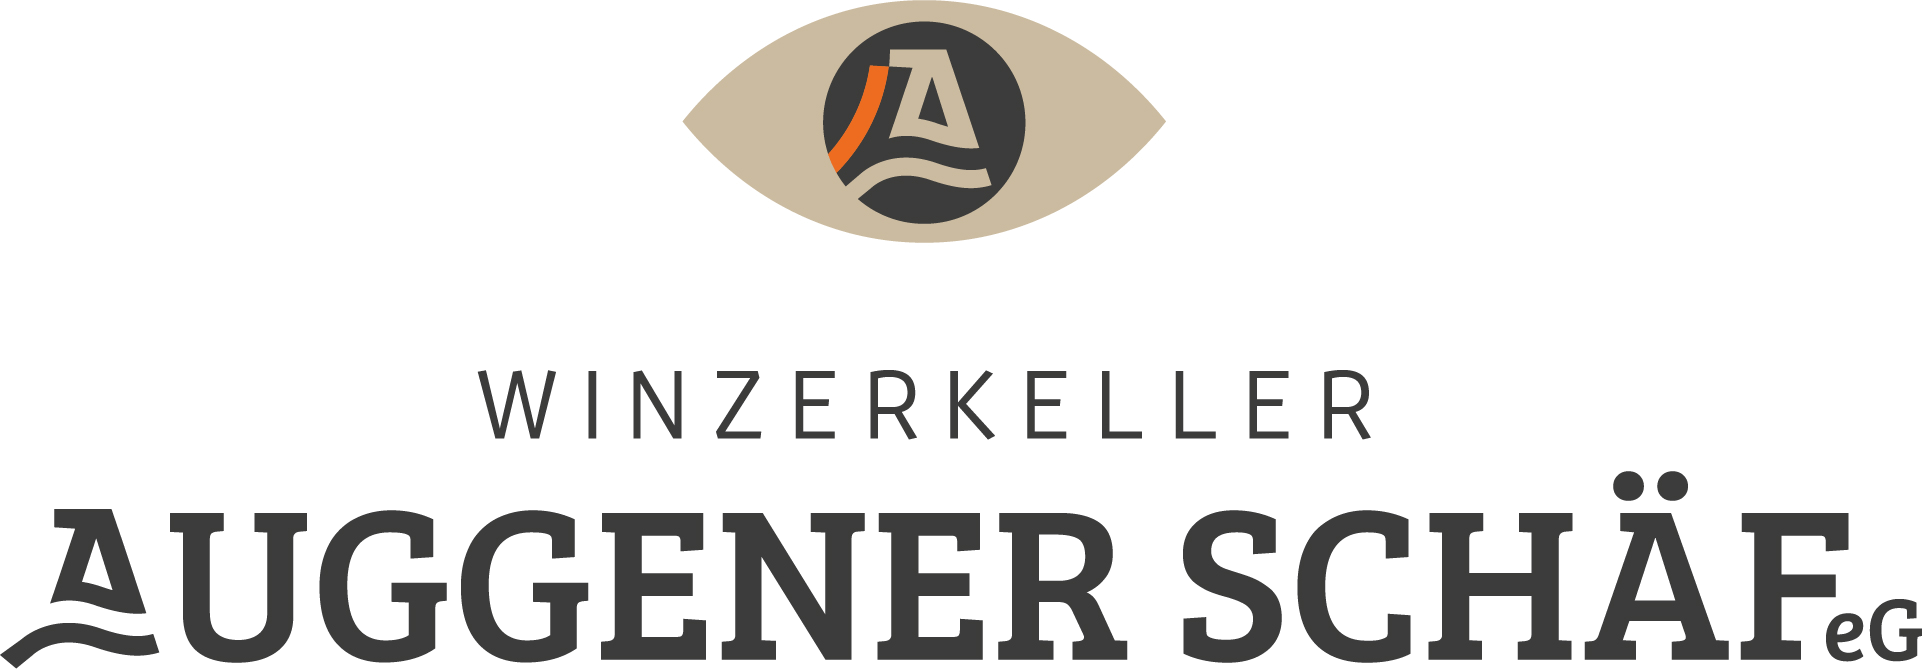 WK Auggener Schäf Logo